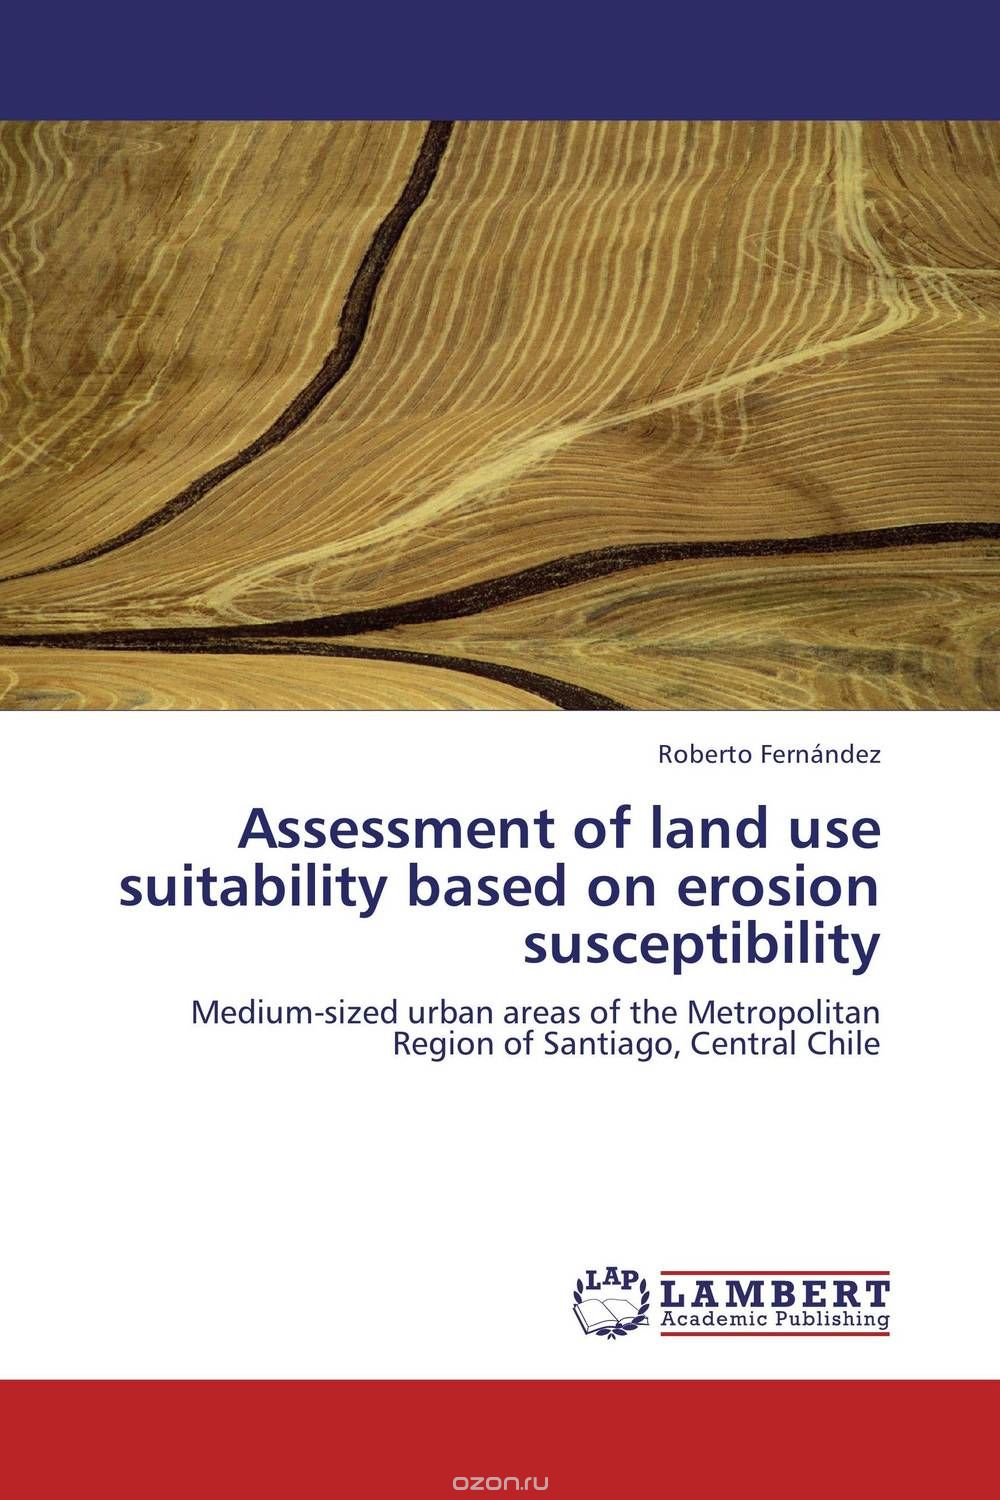 Скачать книгу "Assessment of land use suitability based on erosion susceptibility"